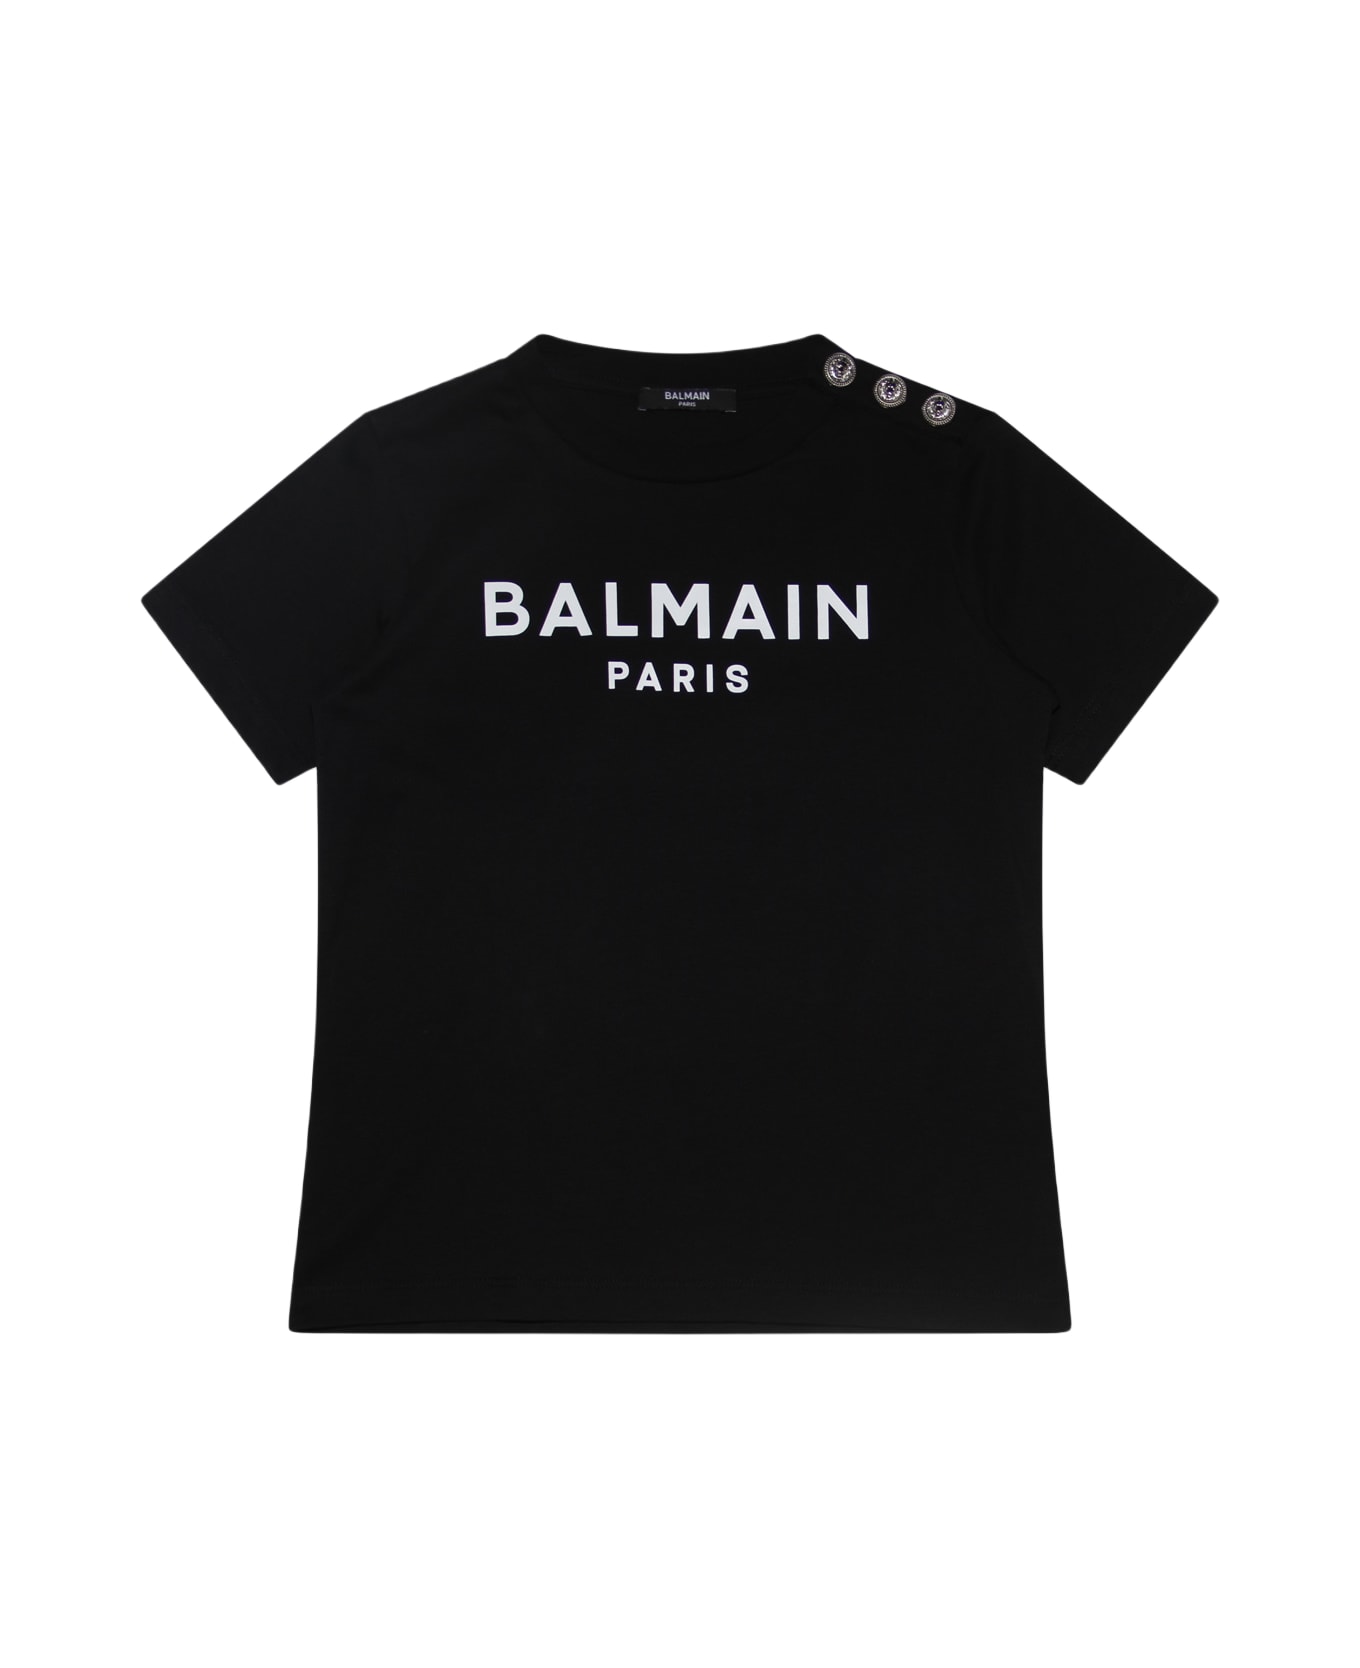 Balmain Black And White Cotton T-shirt - Black